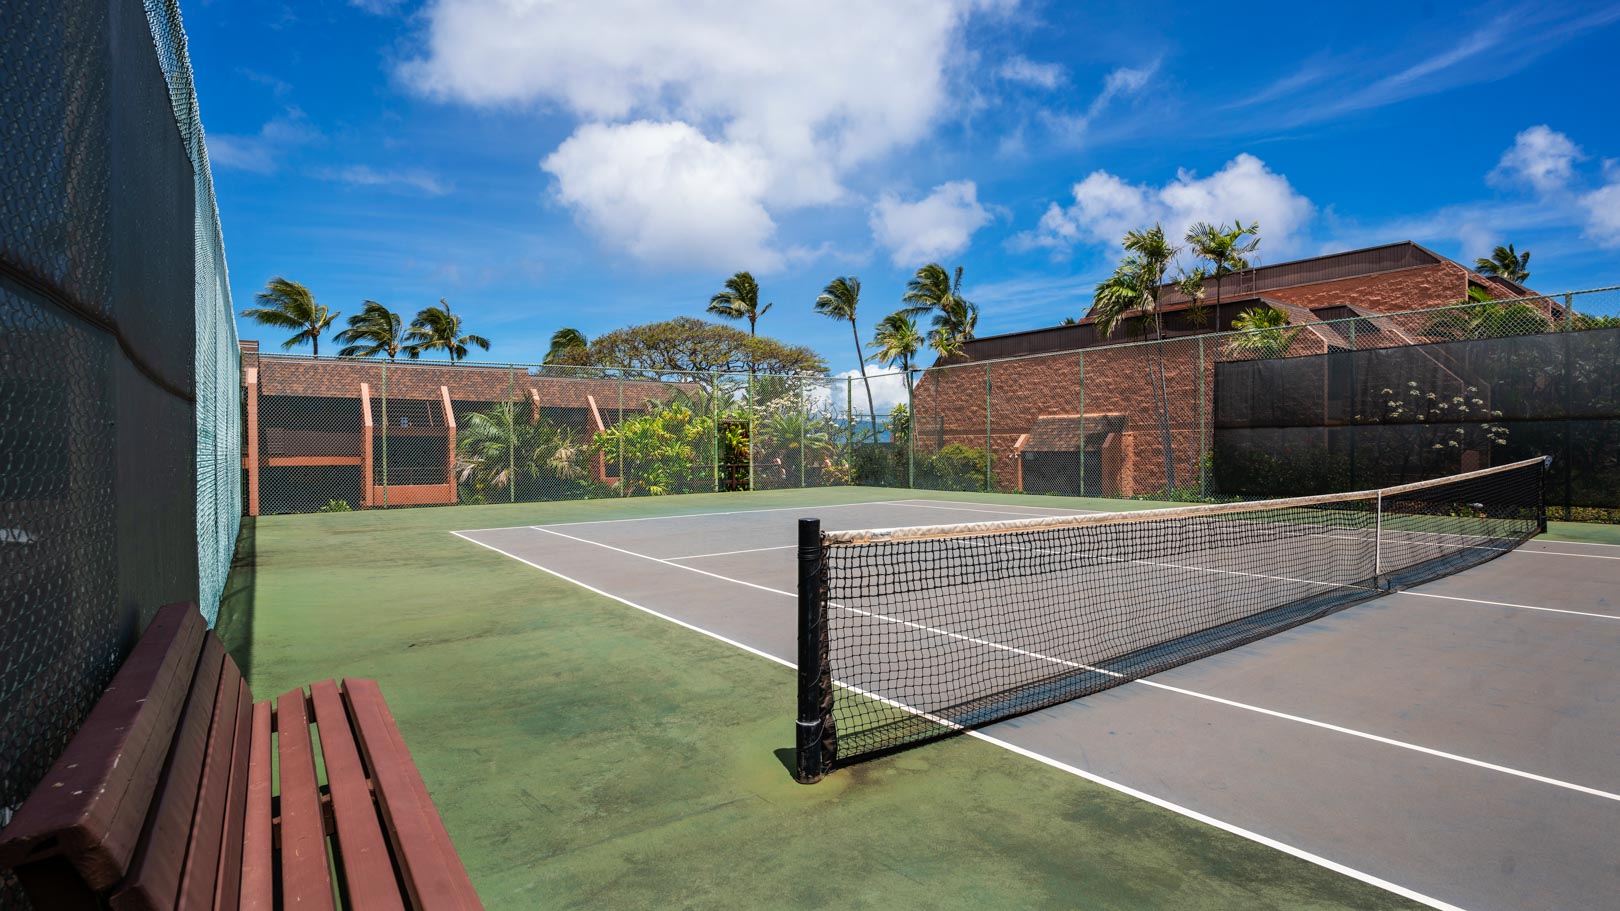 An expansive tennis court at VRI's Kuleana Club in Maui, Hawaii.